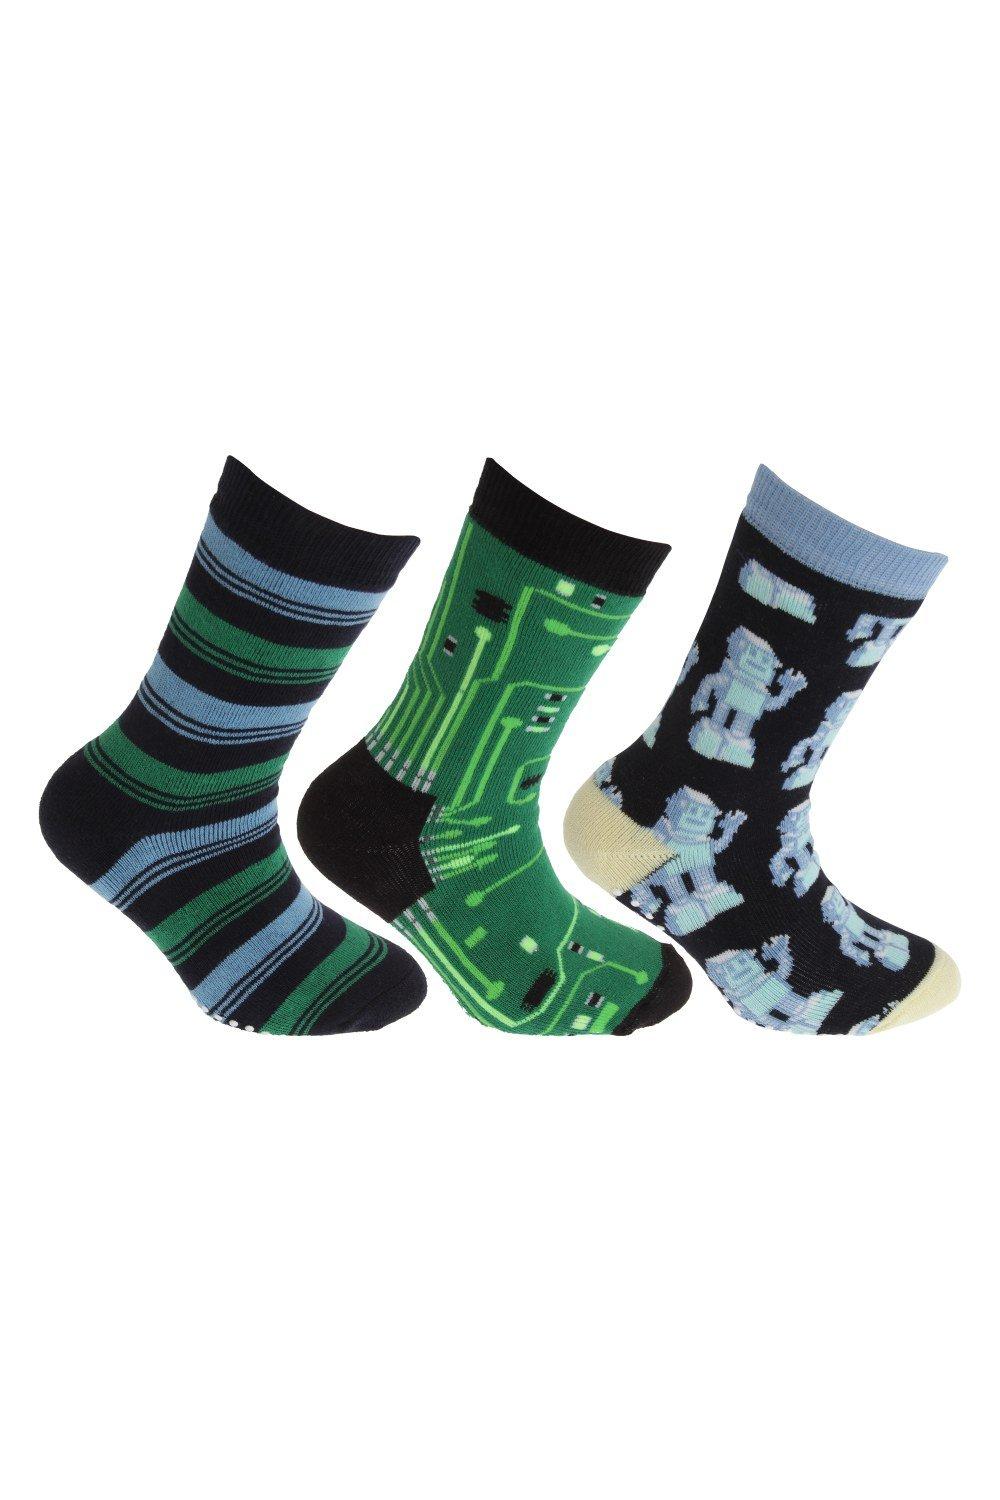 Retro Gripper Socks (3 Pairs)